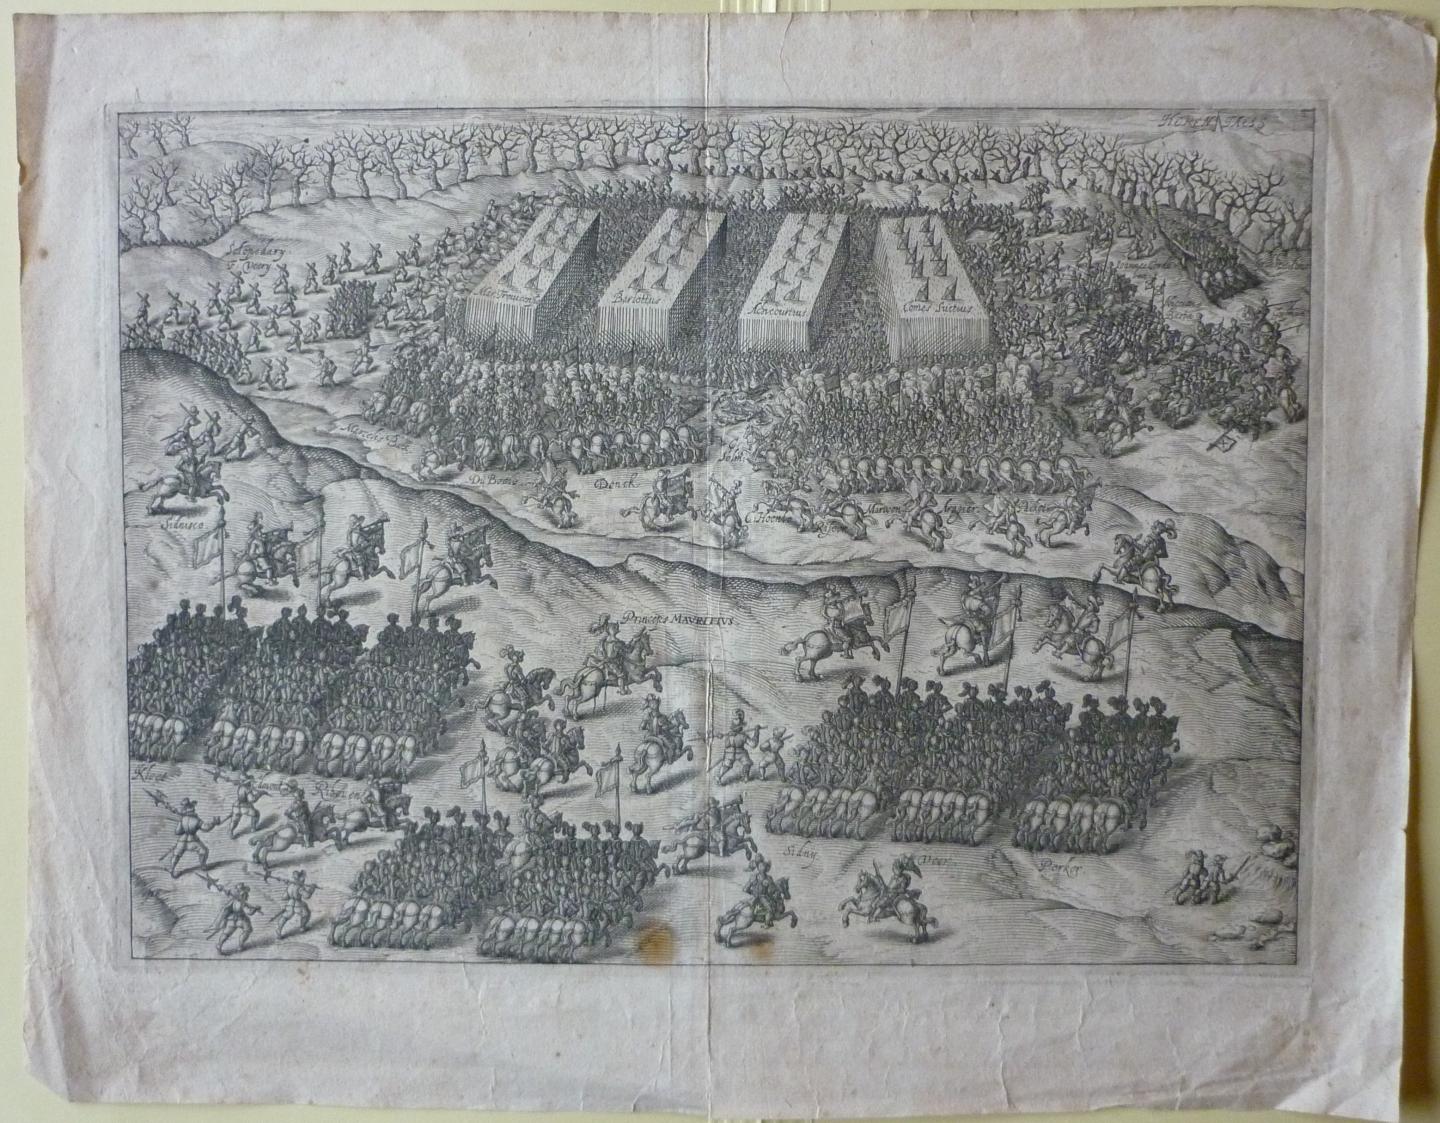  - De slag bij Turnhout 24 januari 1597